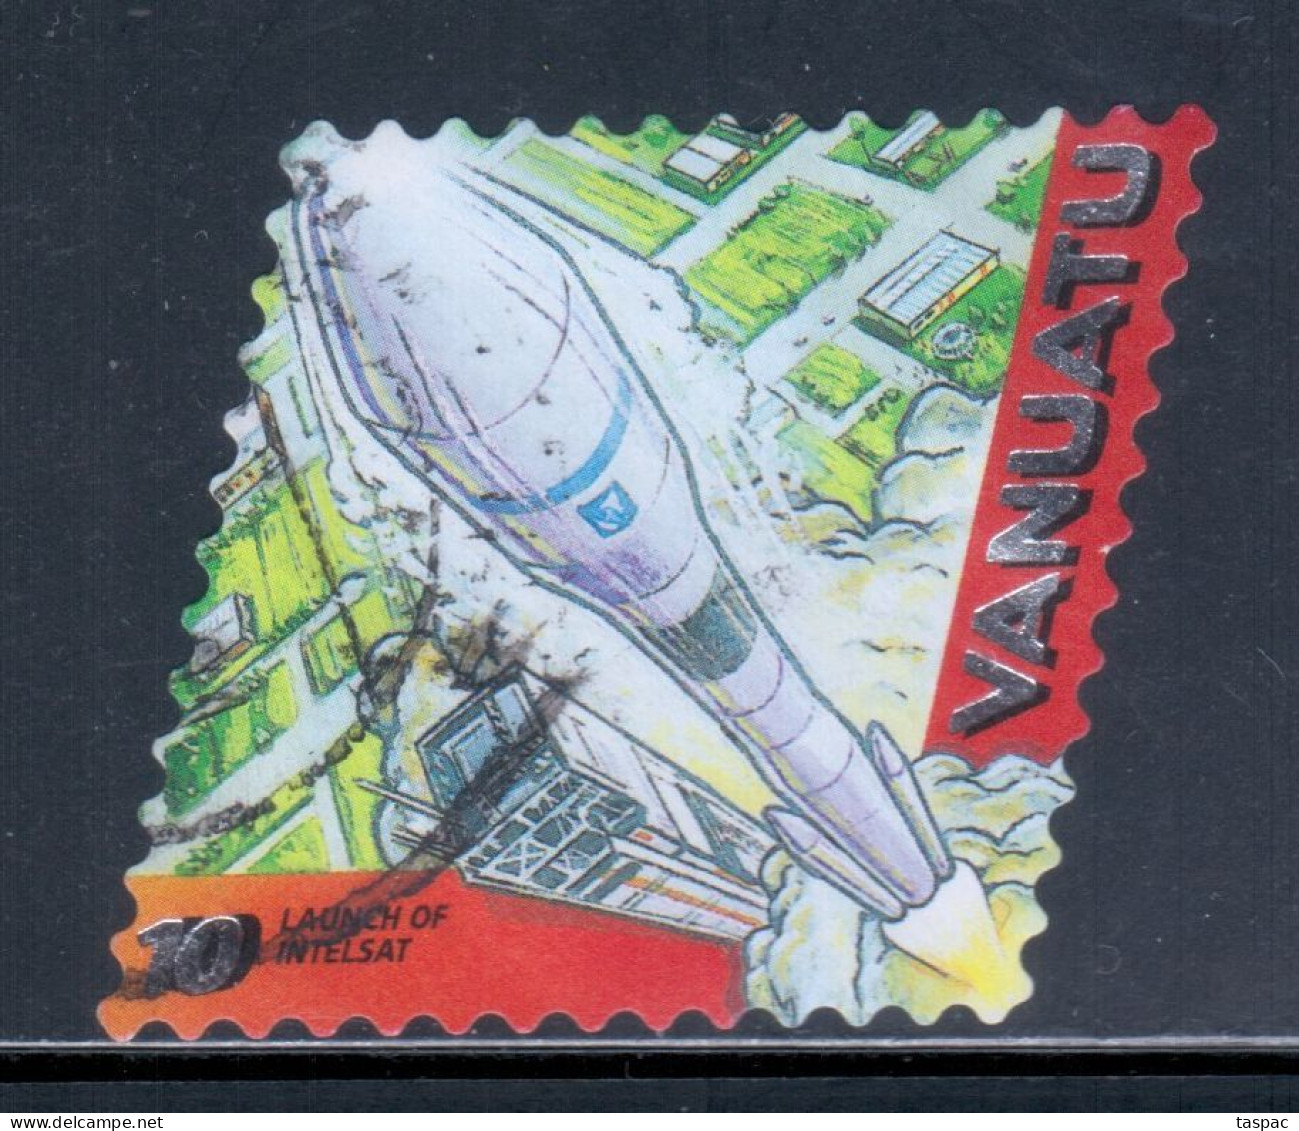 Vanuatu 2000 Mi# 1112 Used - Short Set - Launch Of Intelsat / Space - Océanie